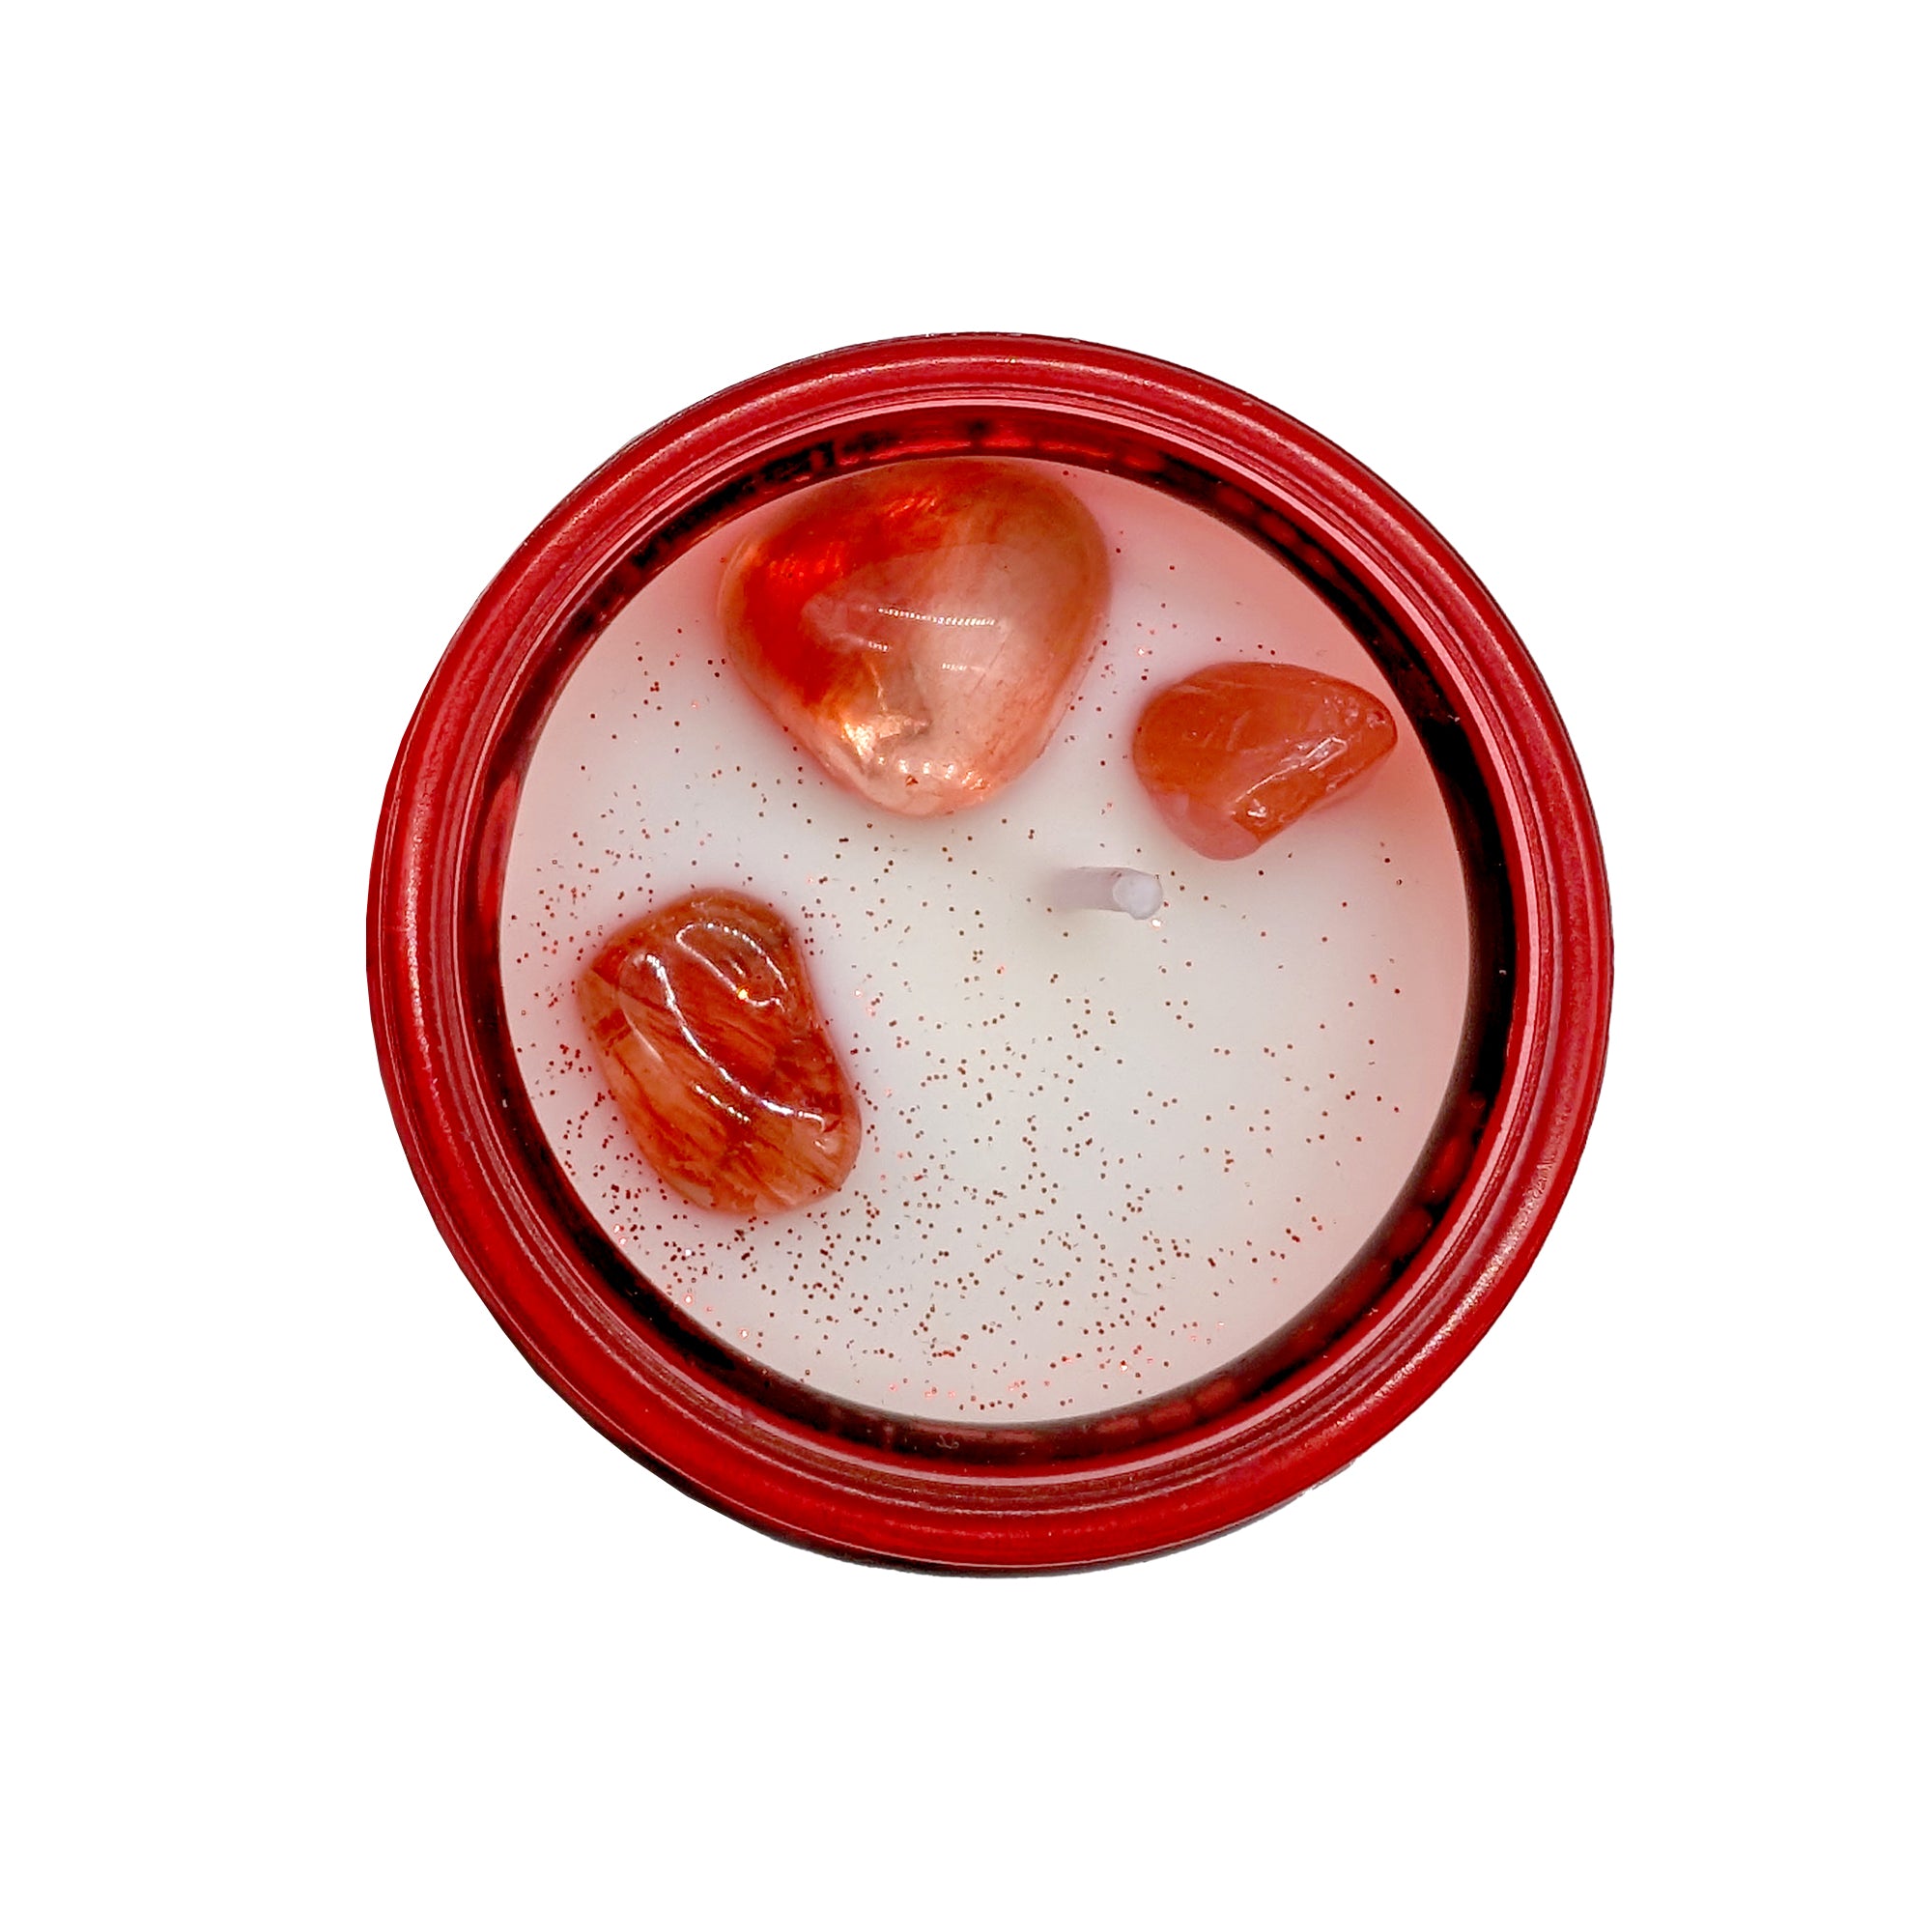 Cello - Gemstone Candle 200g - Foraged Wild Berries with Cherry Quartz